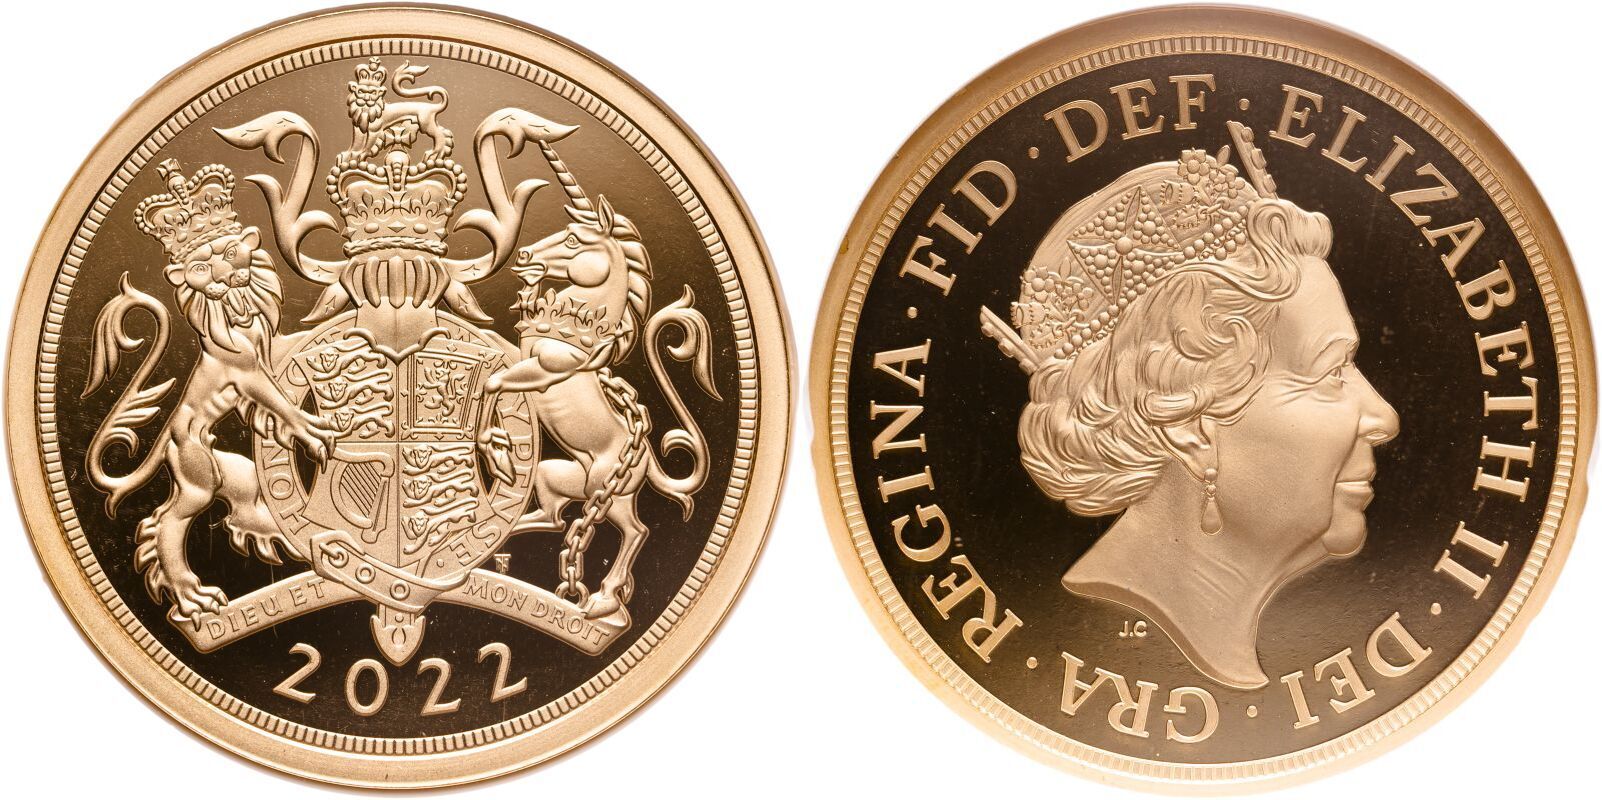 Lot 116 | United Kingdom Elizabeth II 2022 Gold 5 Pounds (5 Sovereigns) Platinum Jubilee Proof Pattern Piedfort NGC PF 70 ULTRA CAMEO #2880313-001 (AGW=2.3553 oz.)